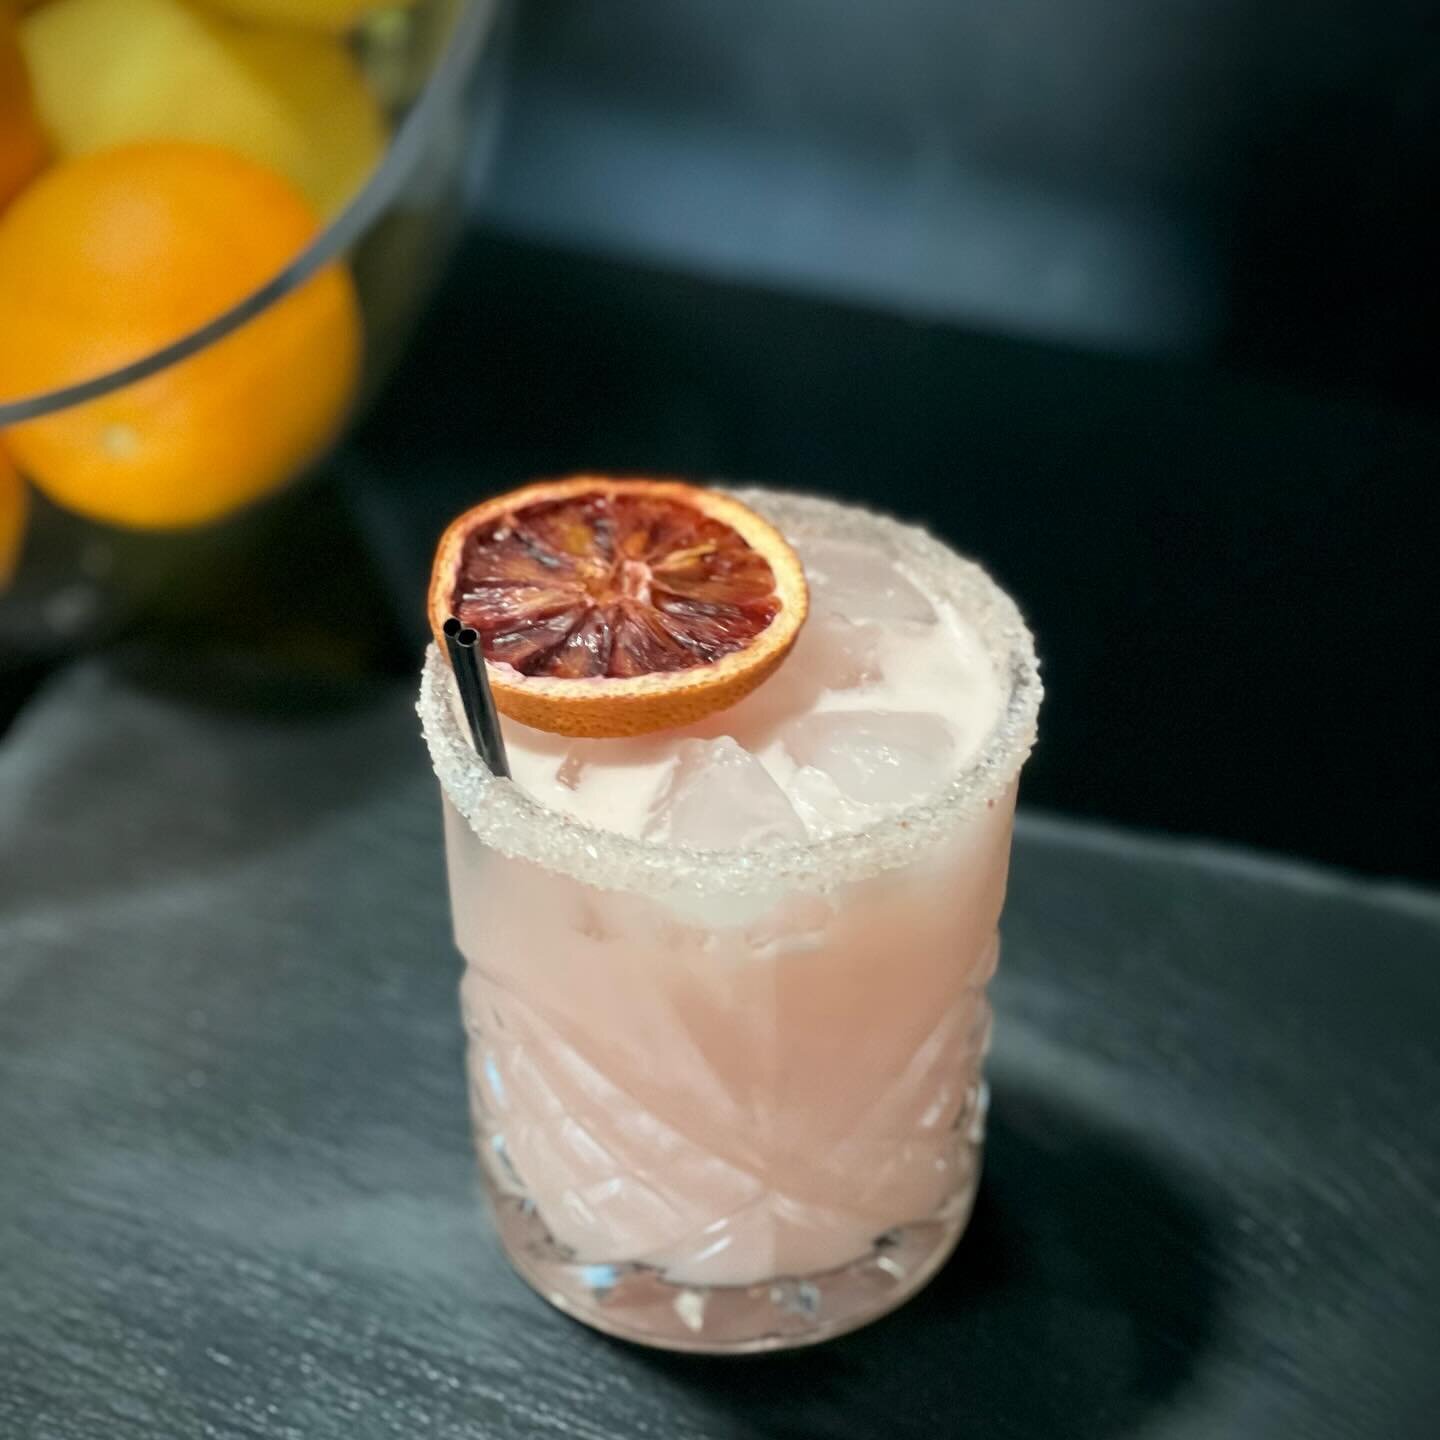 Blood Orange Coconut Margaritas 😋🍊🥥
&bull;
&bull;
&bull;
#bartender #mobilebar #cocktails #margarita #casamigostequila #tequila #mixolgy #unomas #backroadsmobilebar #baddiesandbooze  #smallbusiness #indigenousowned